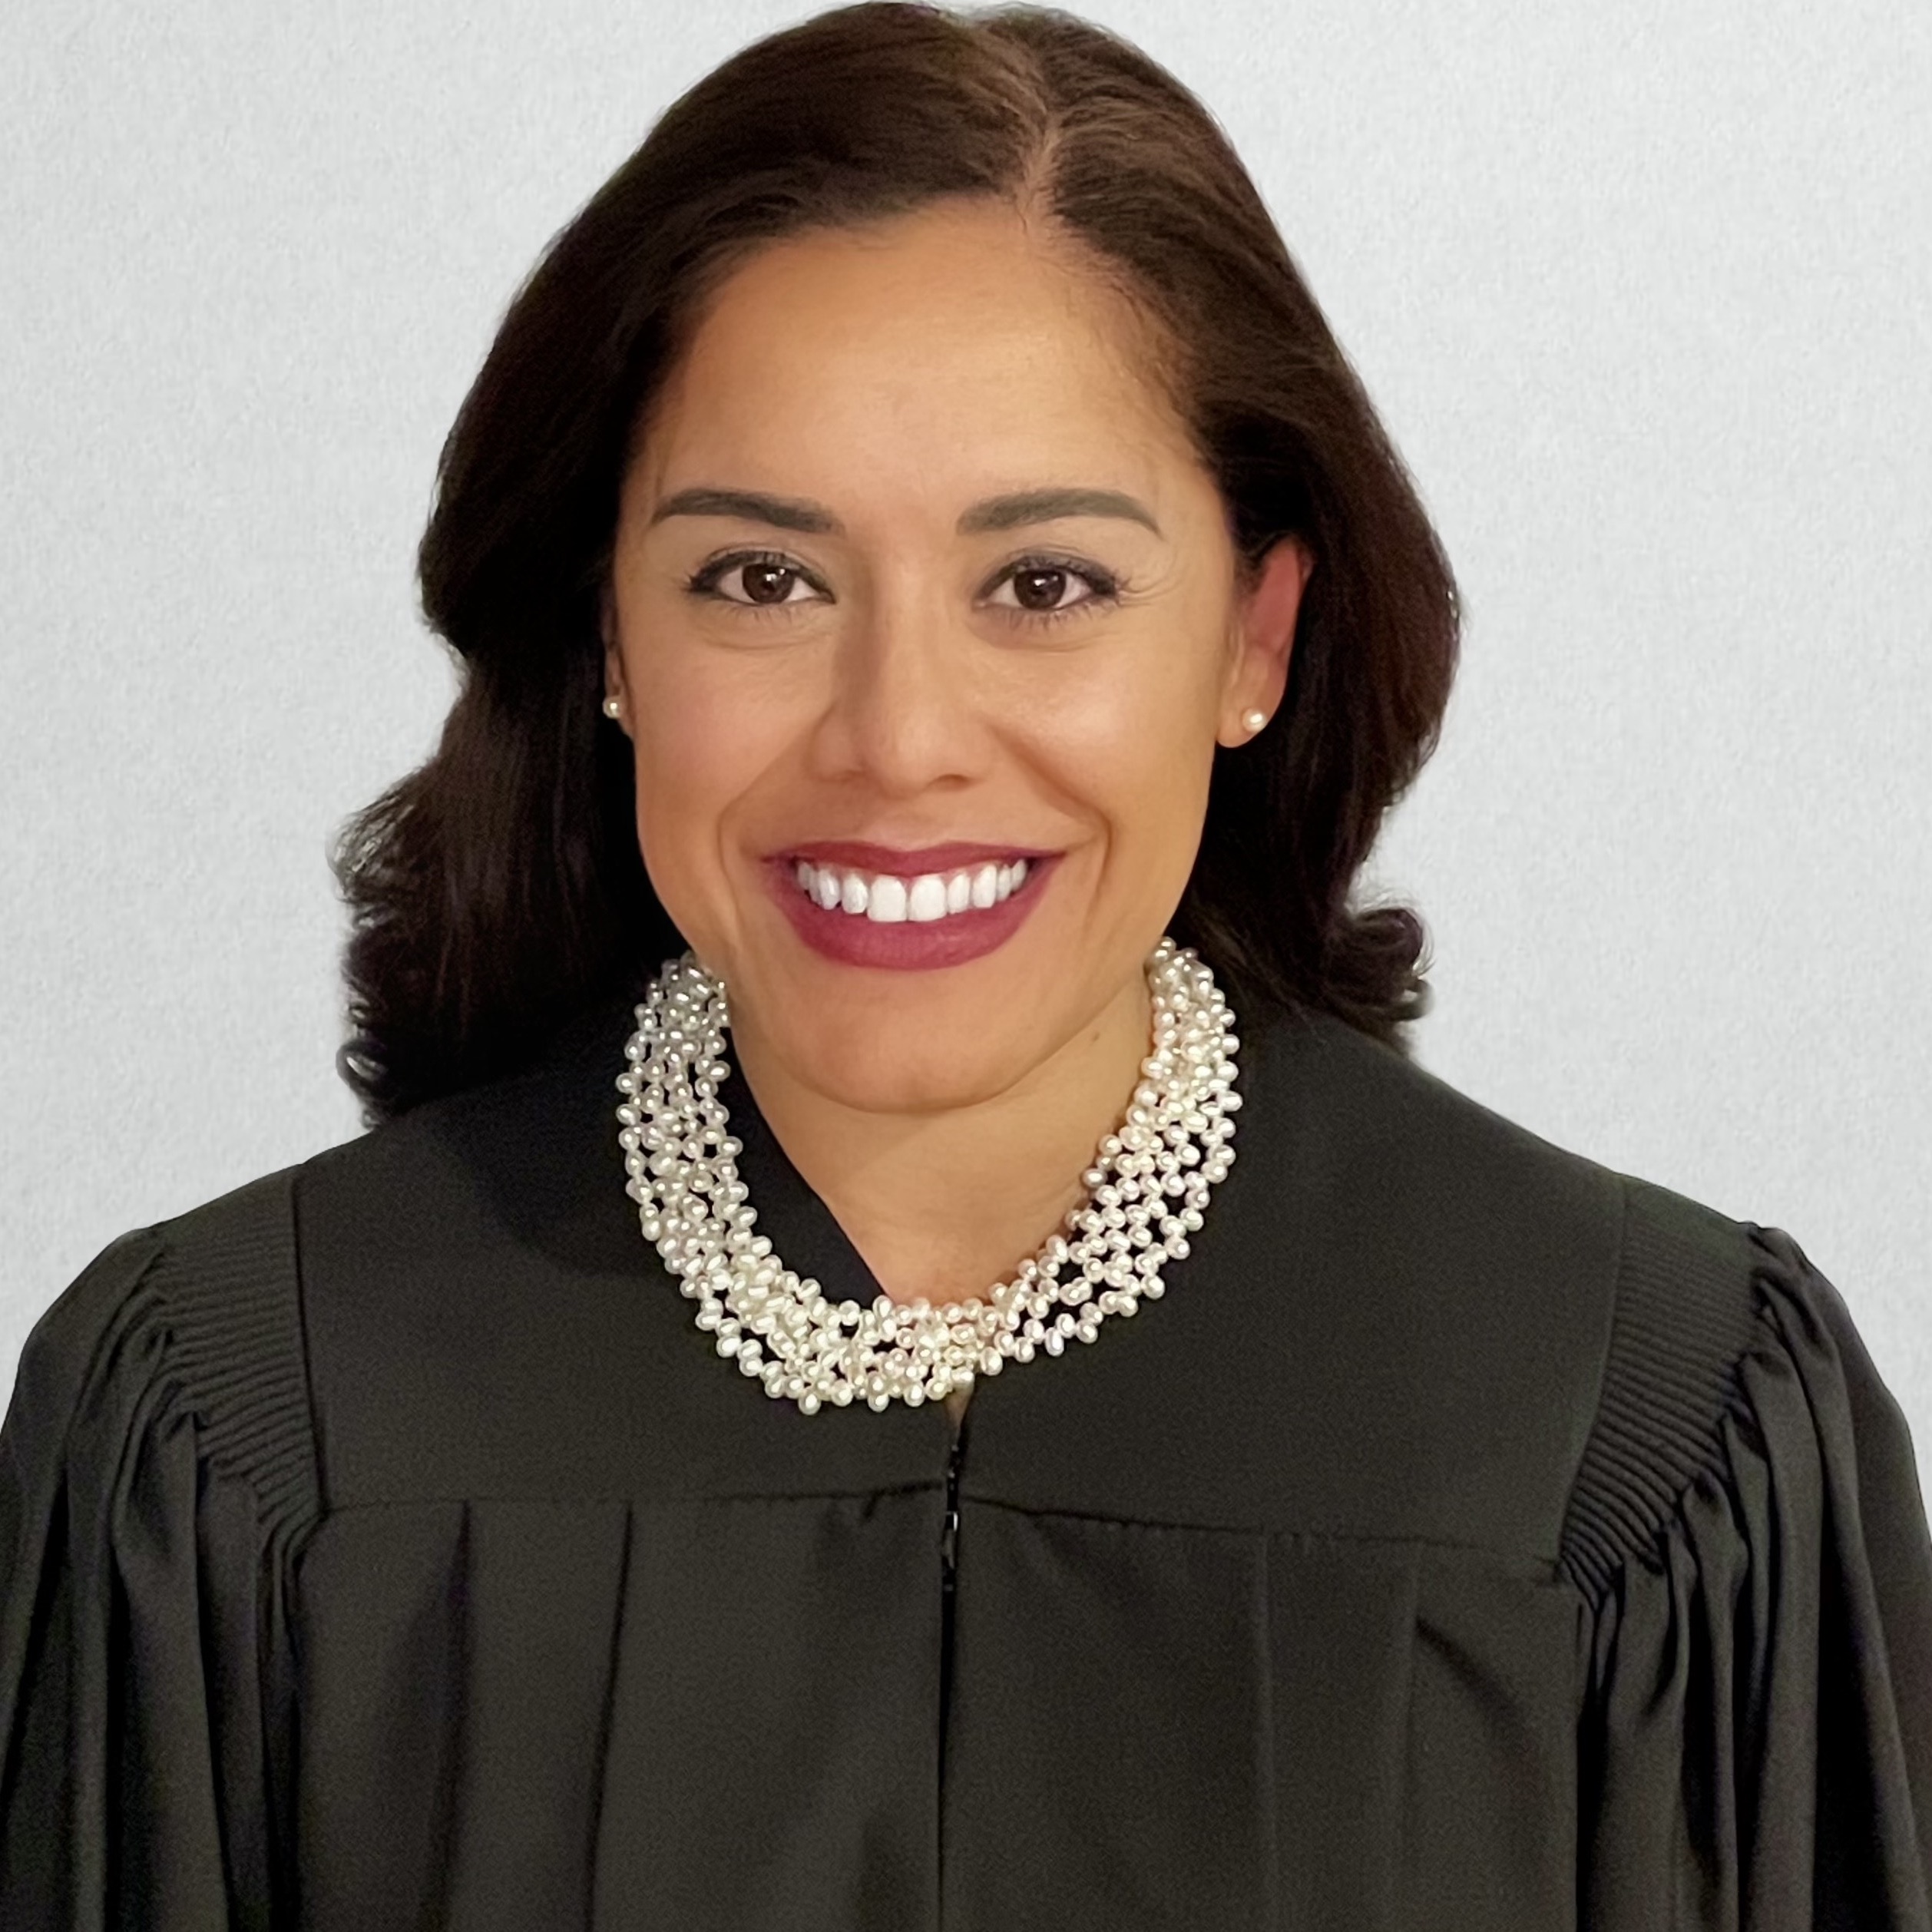 Judge Diana Lopez